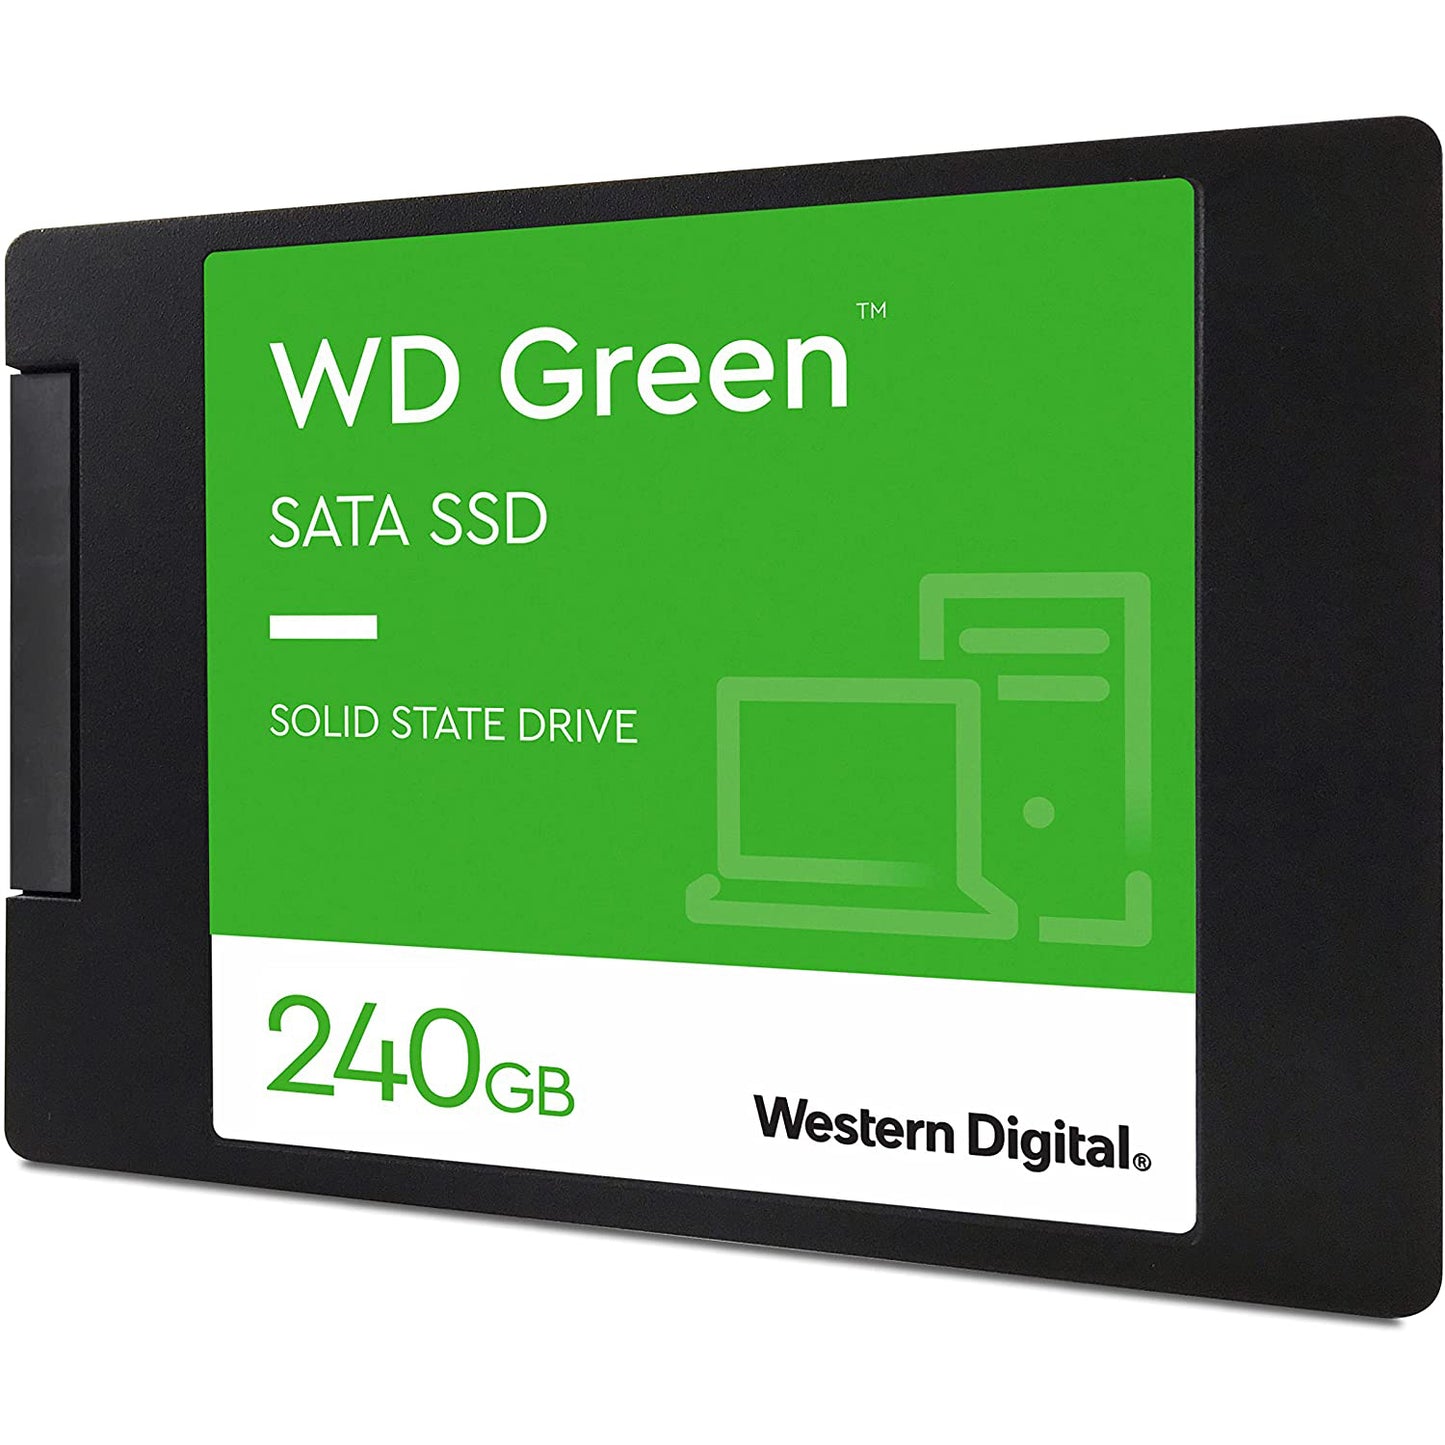 WD Green 240GB 2.5" SATA SSD/Solid State Drive PC